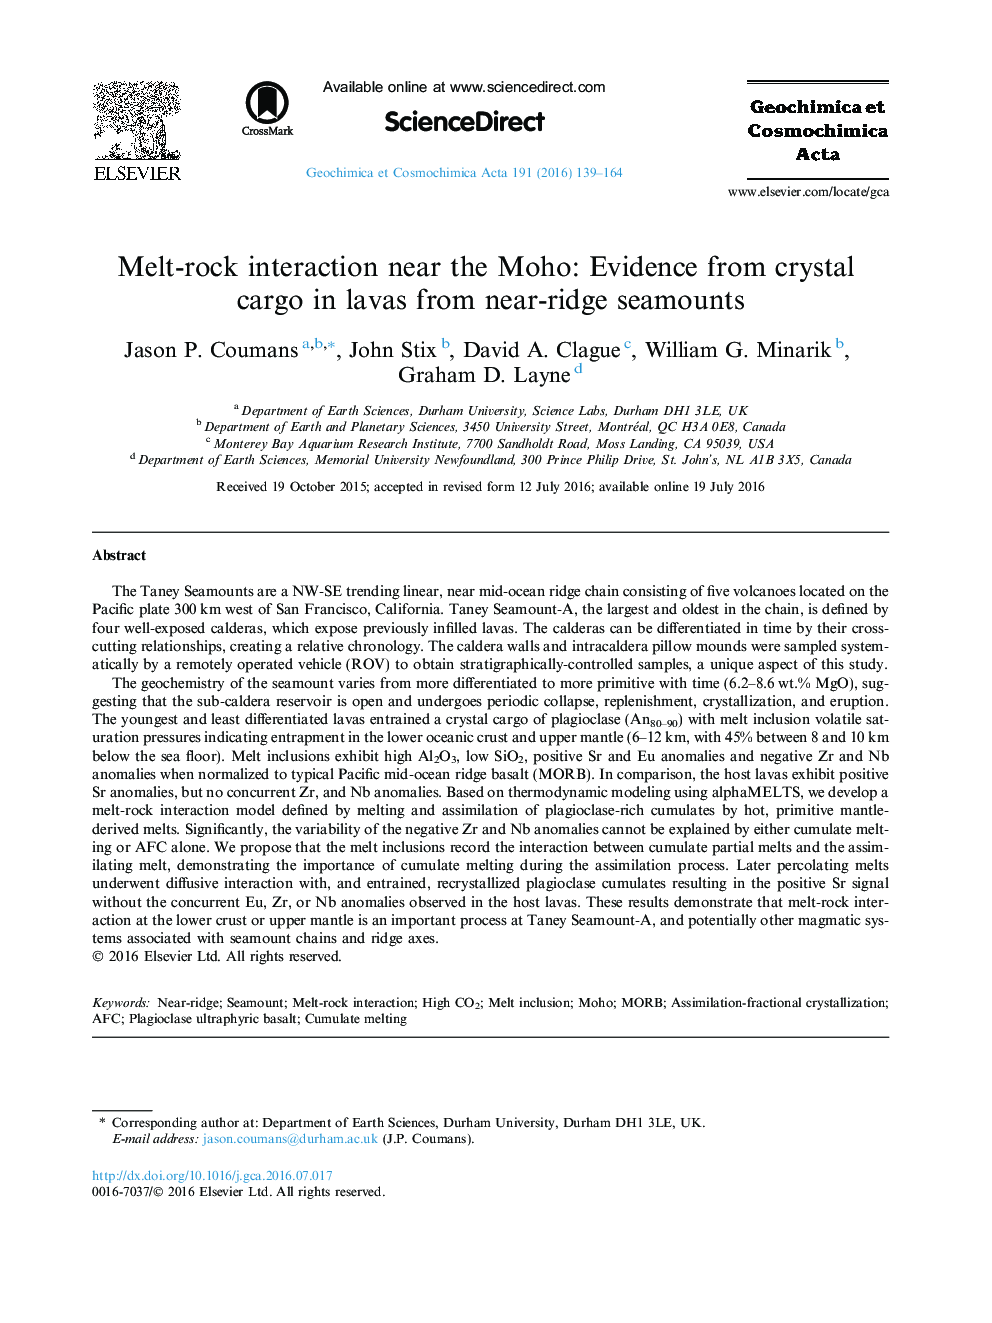 Melt-rock interaction near the Moho: Evidence from crystal cargo in lavas from near-ridge seamounts